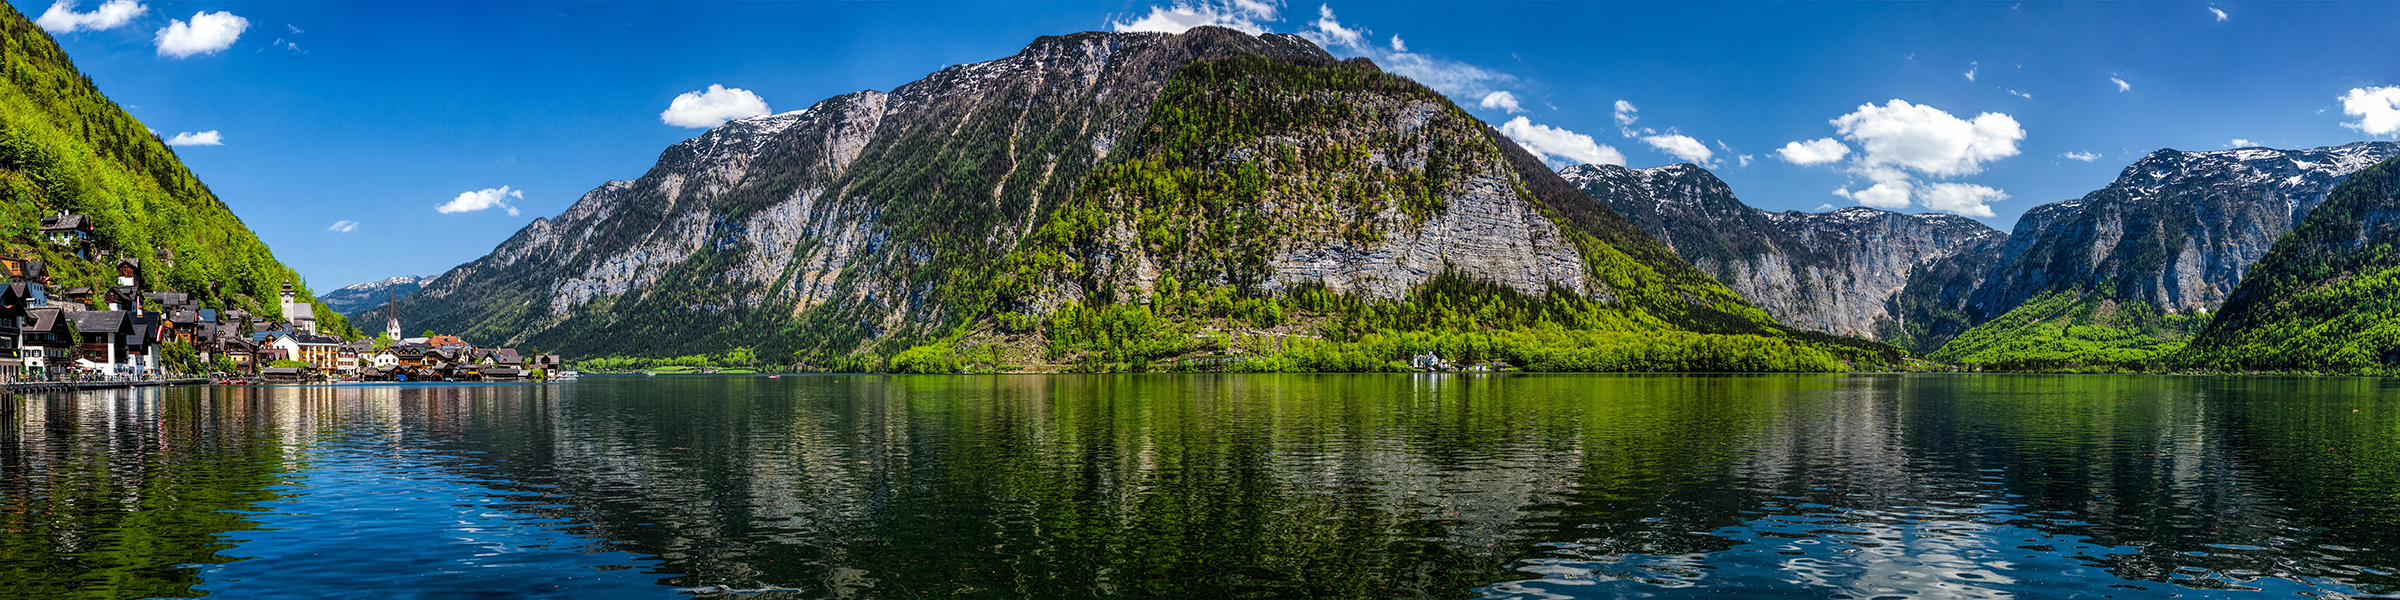 Austria Alps Lake Hallstatt